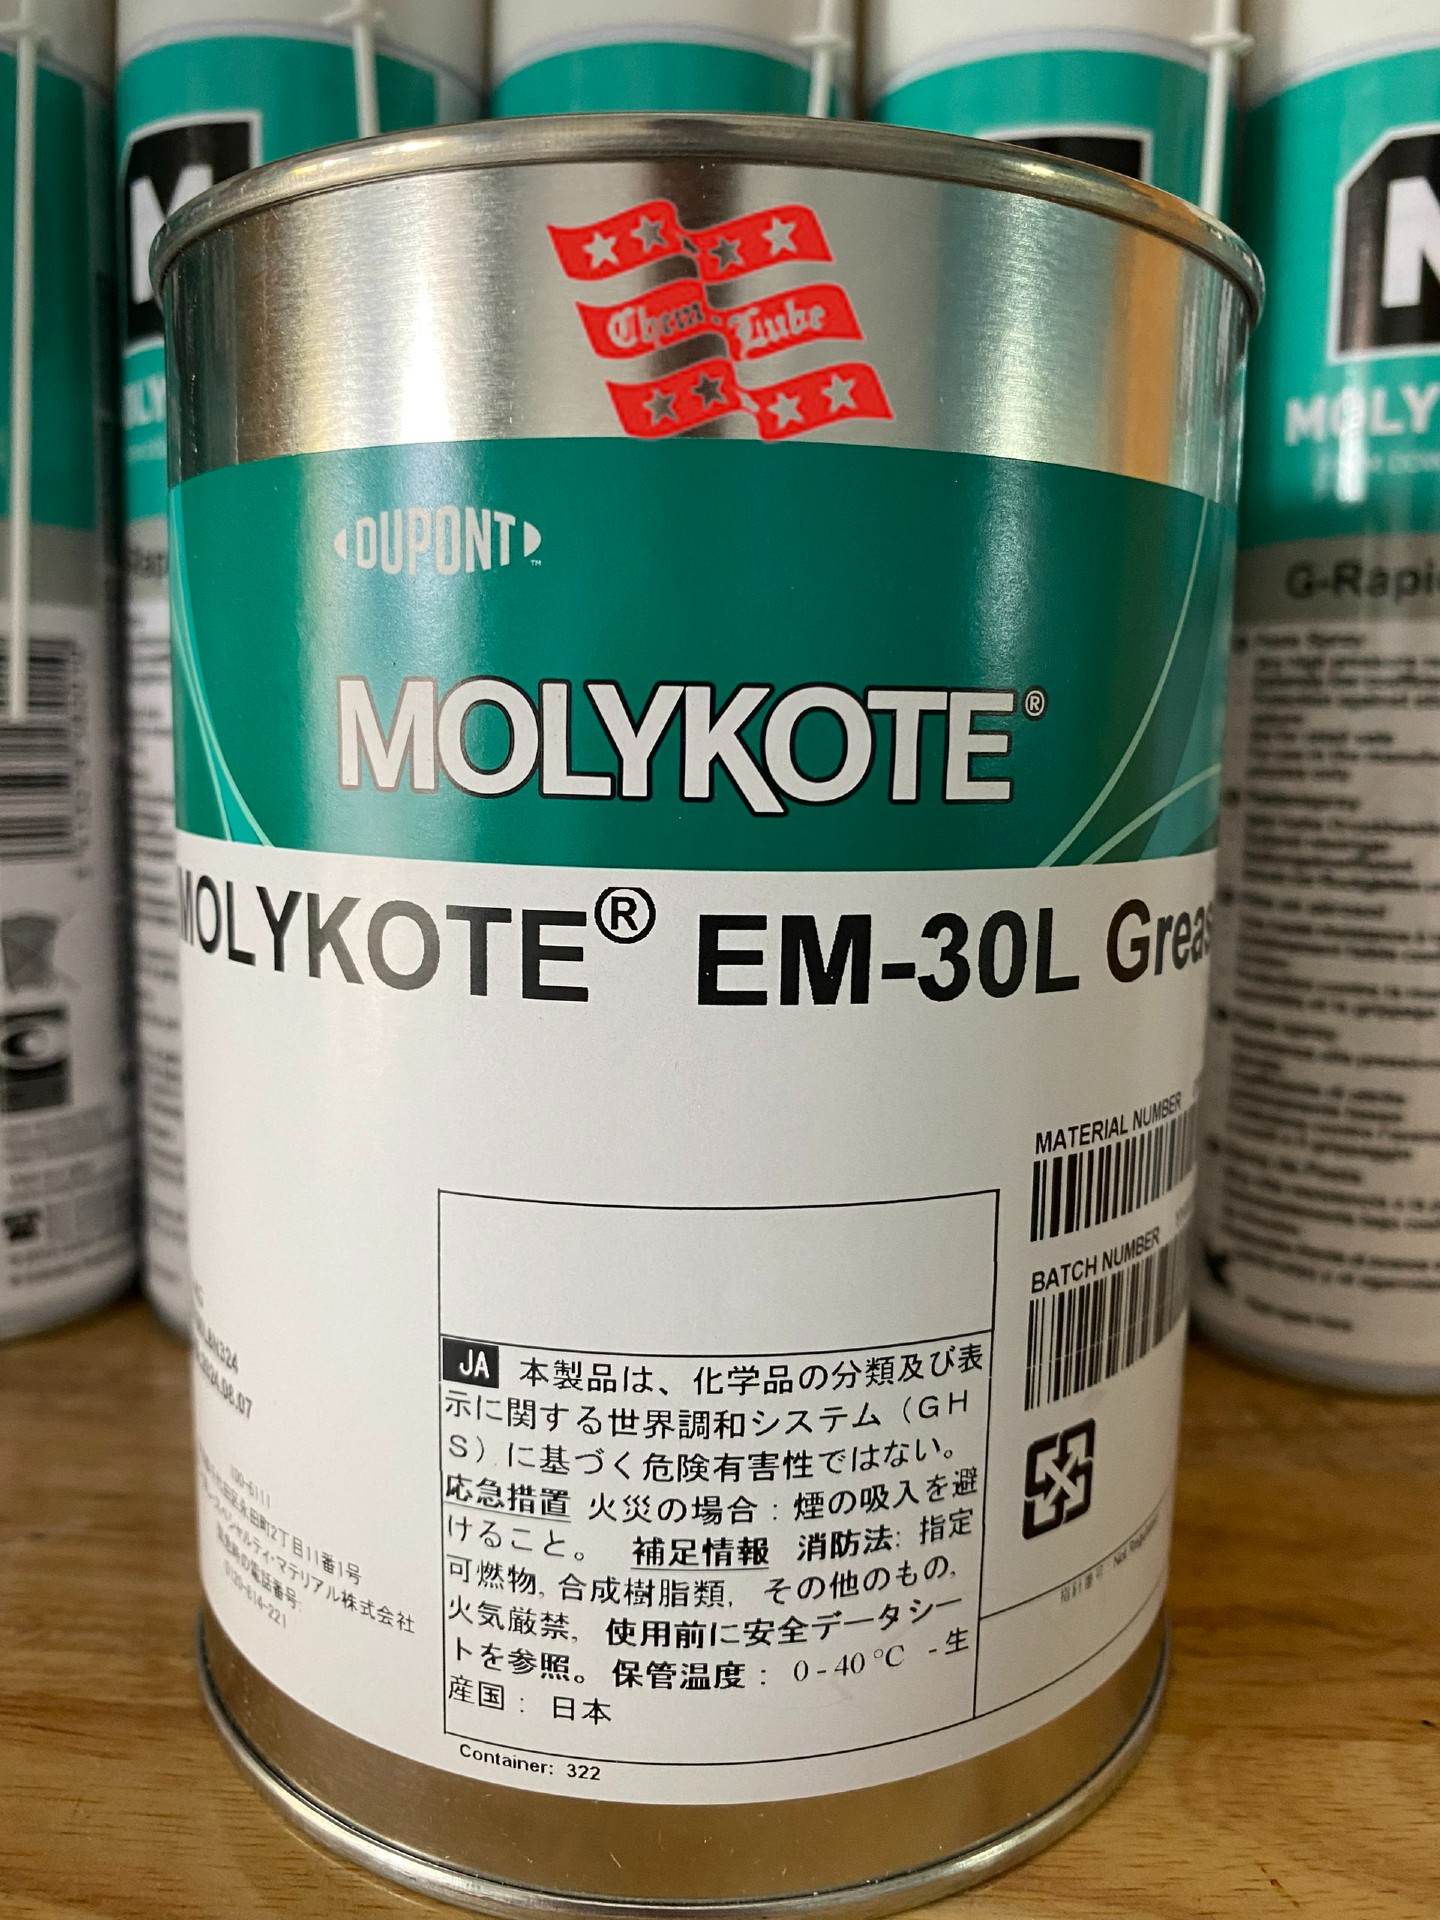 MOLYKOTE EM-30L GREASE